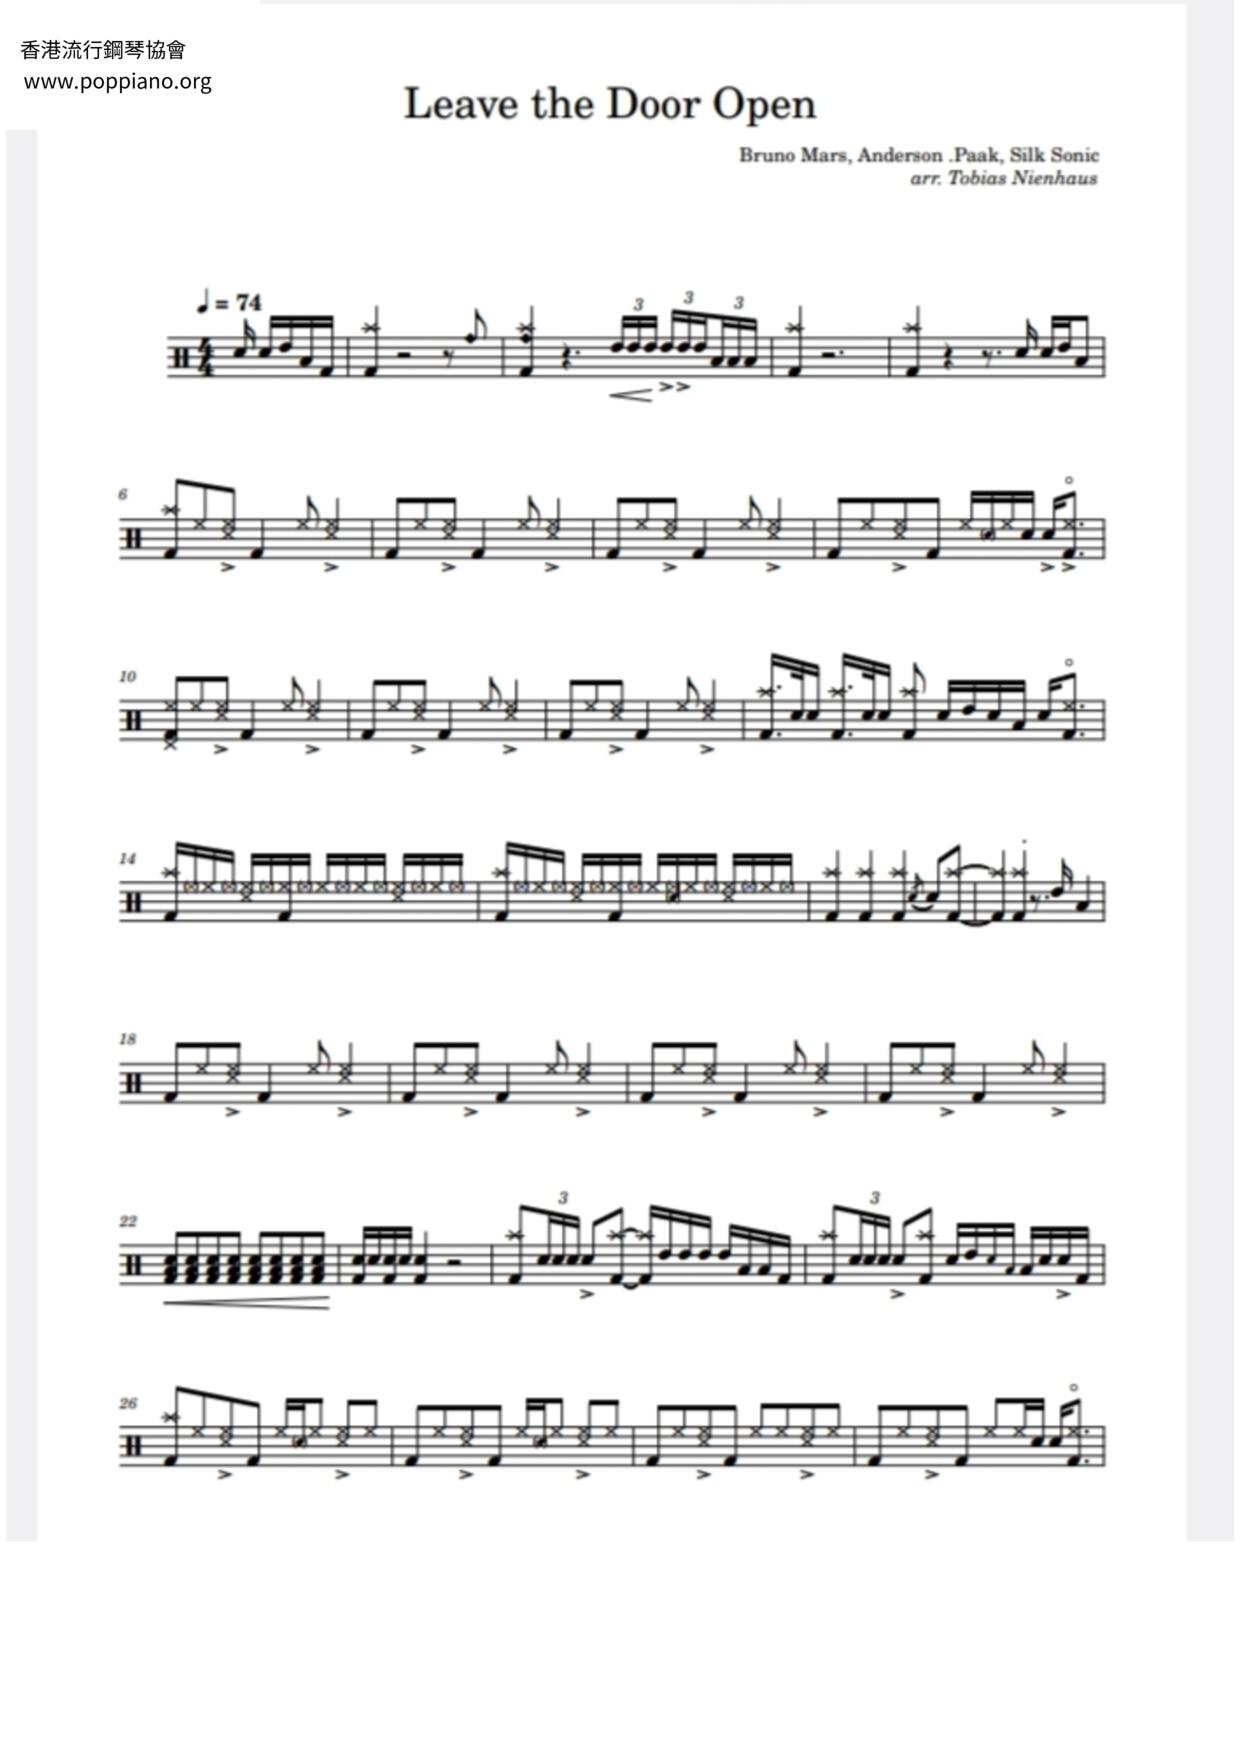 Bruno Mars-Leave The Door Open Drum Tab pdf, - Free Score Download ★